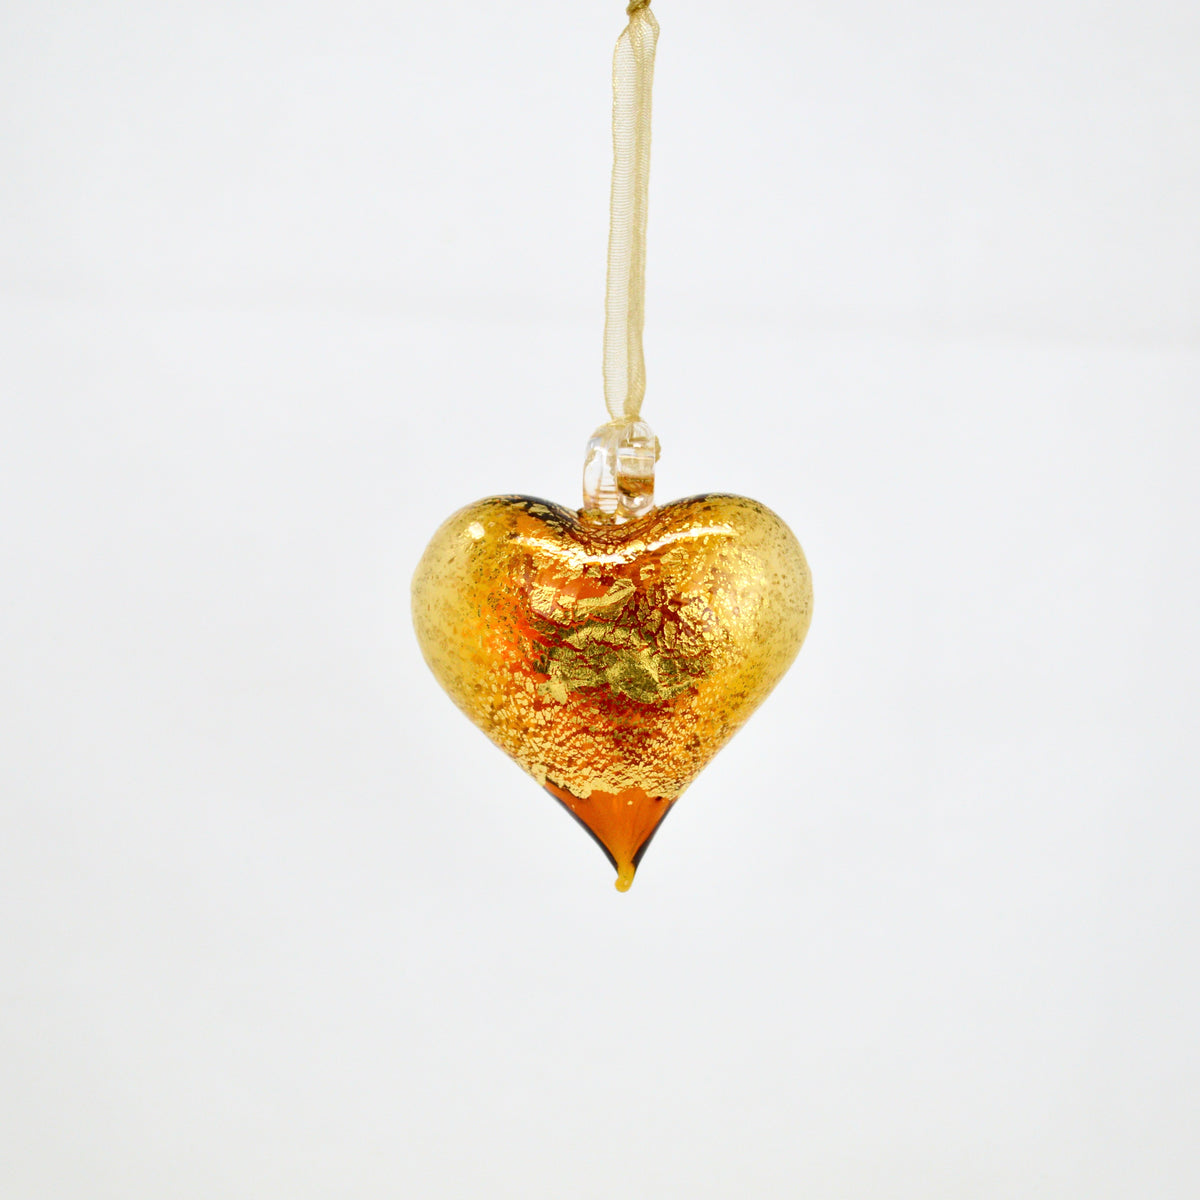 Murano Glass Small Heart Ornament, Made in Italy - My Italian Decor